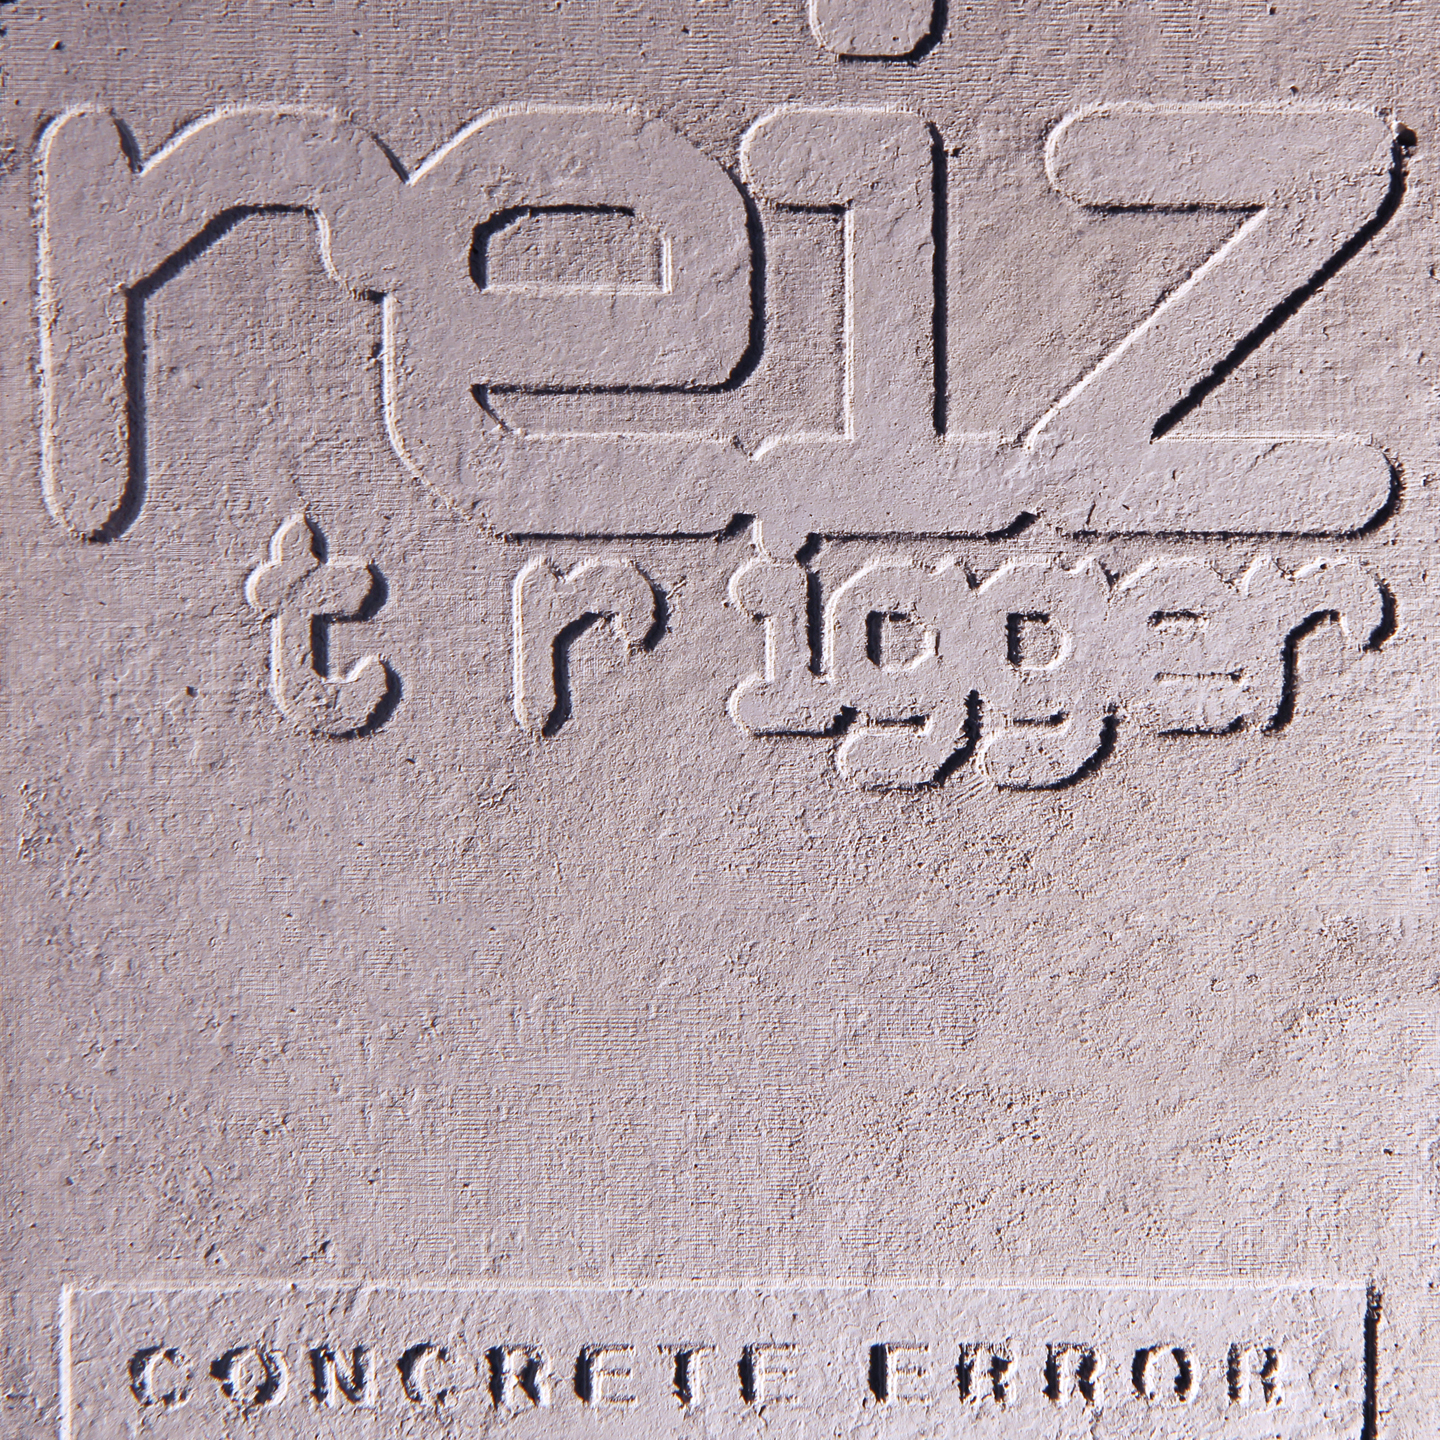 CD Reiz Trigger: "Concrete Error" (Deluxe Edition)